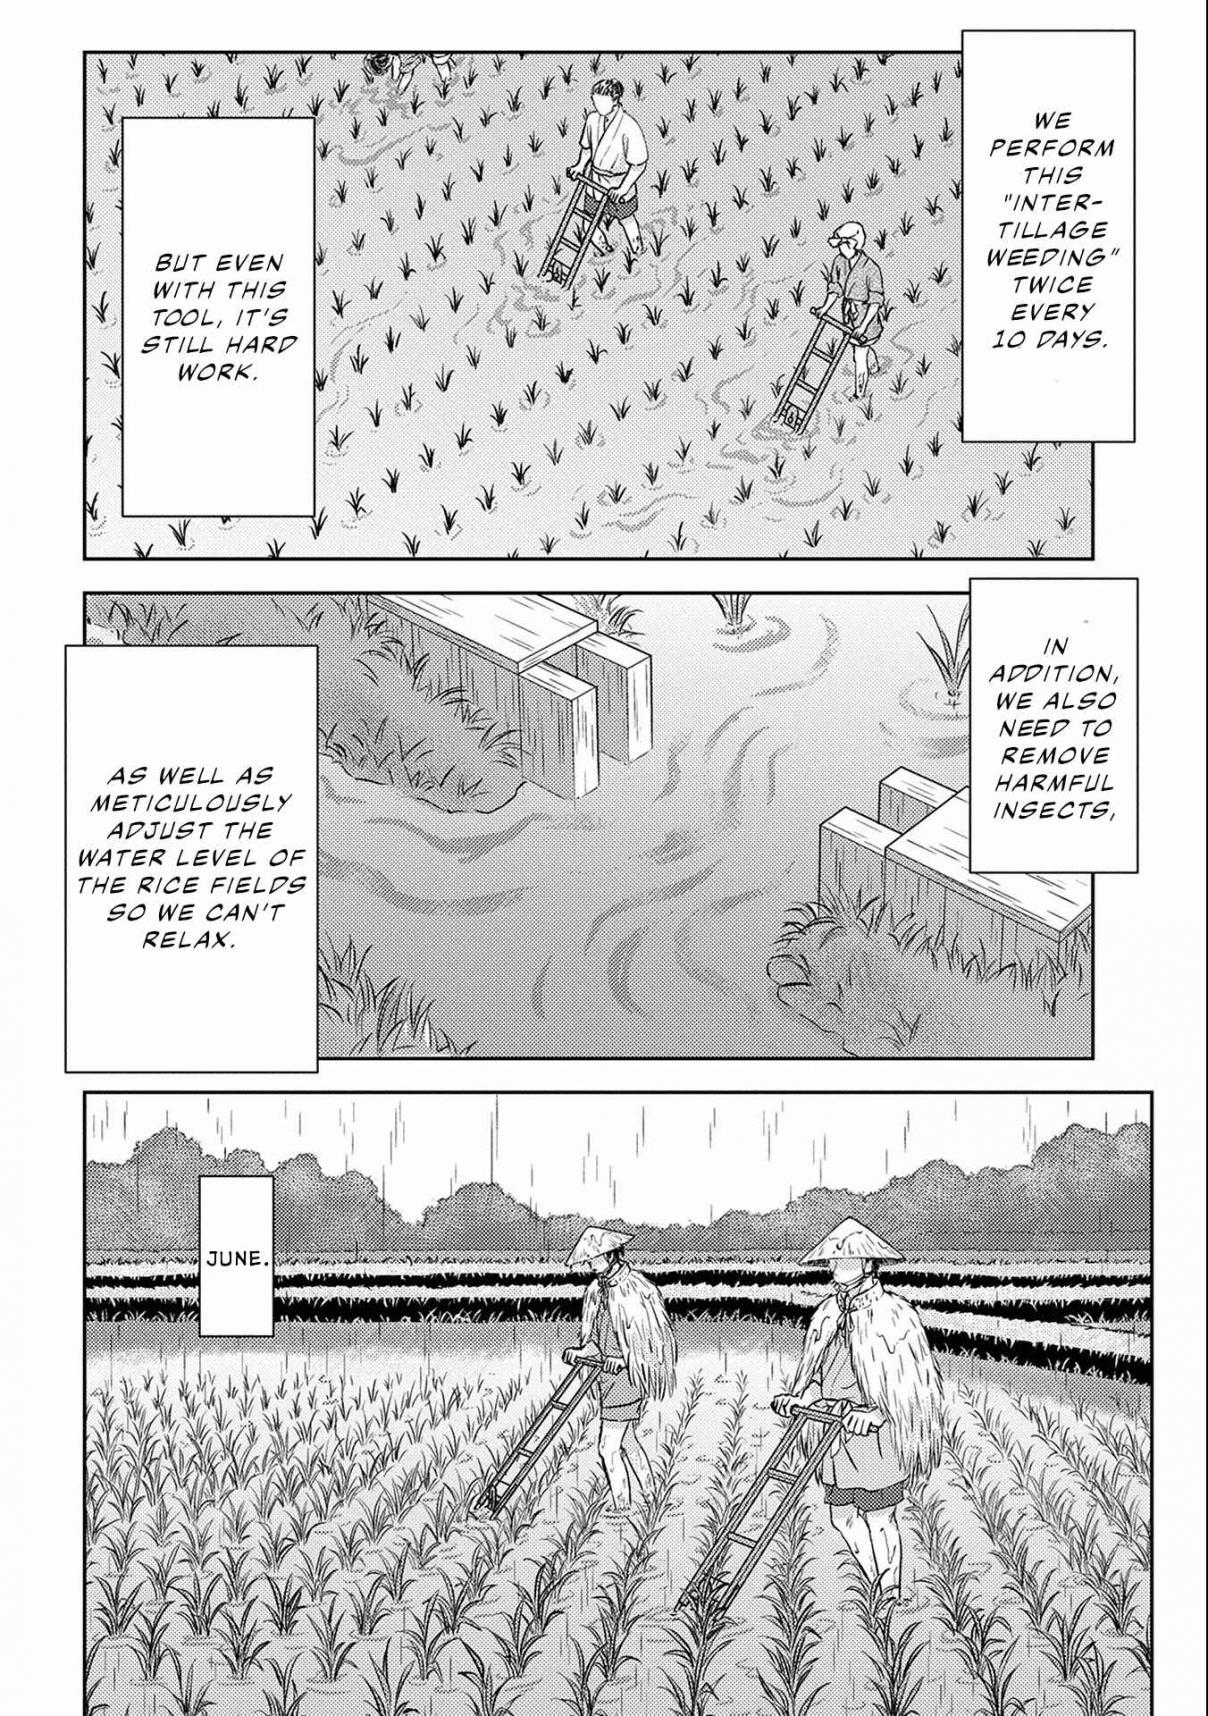 Sengoku Komachi Kuroutan: Noukou Giga Vol. 2 Ch. 6 Rice Cultivation